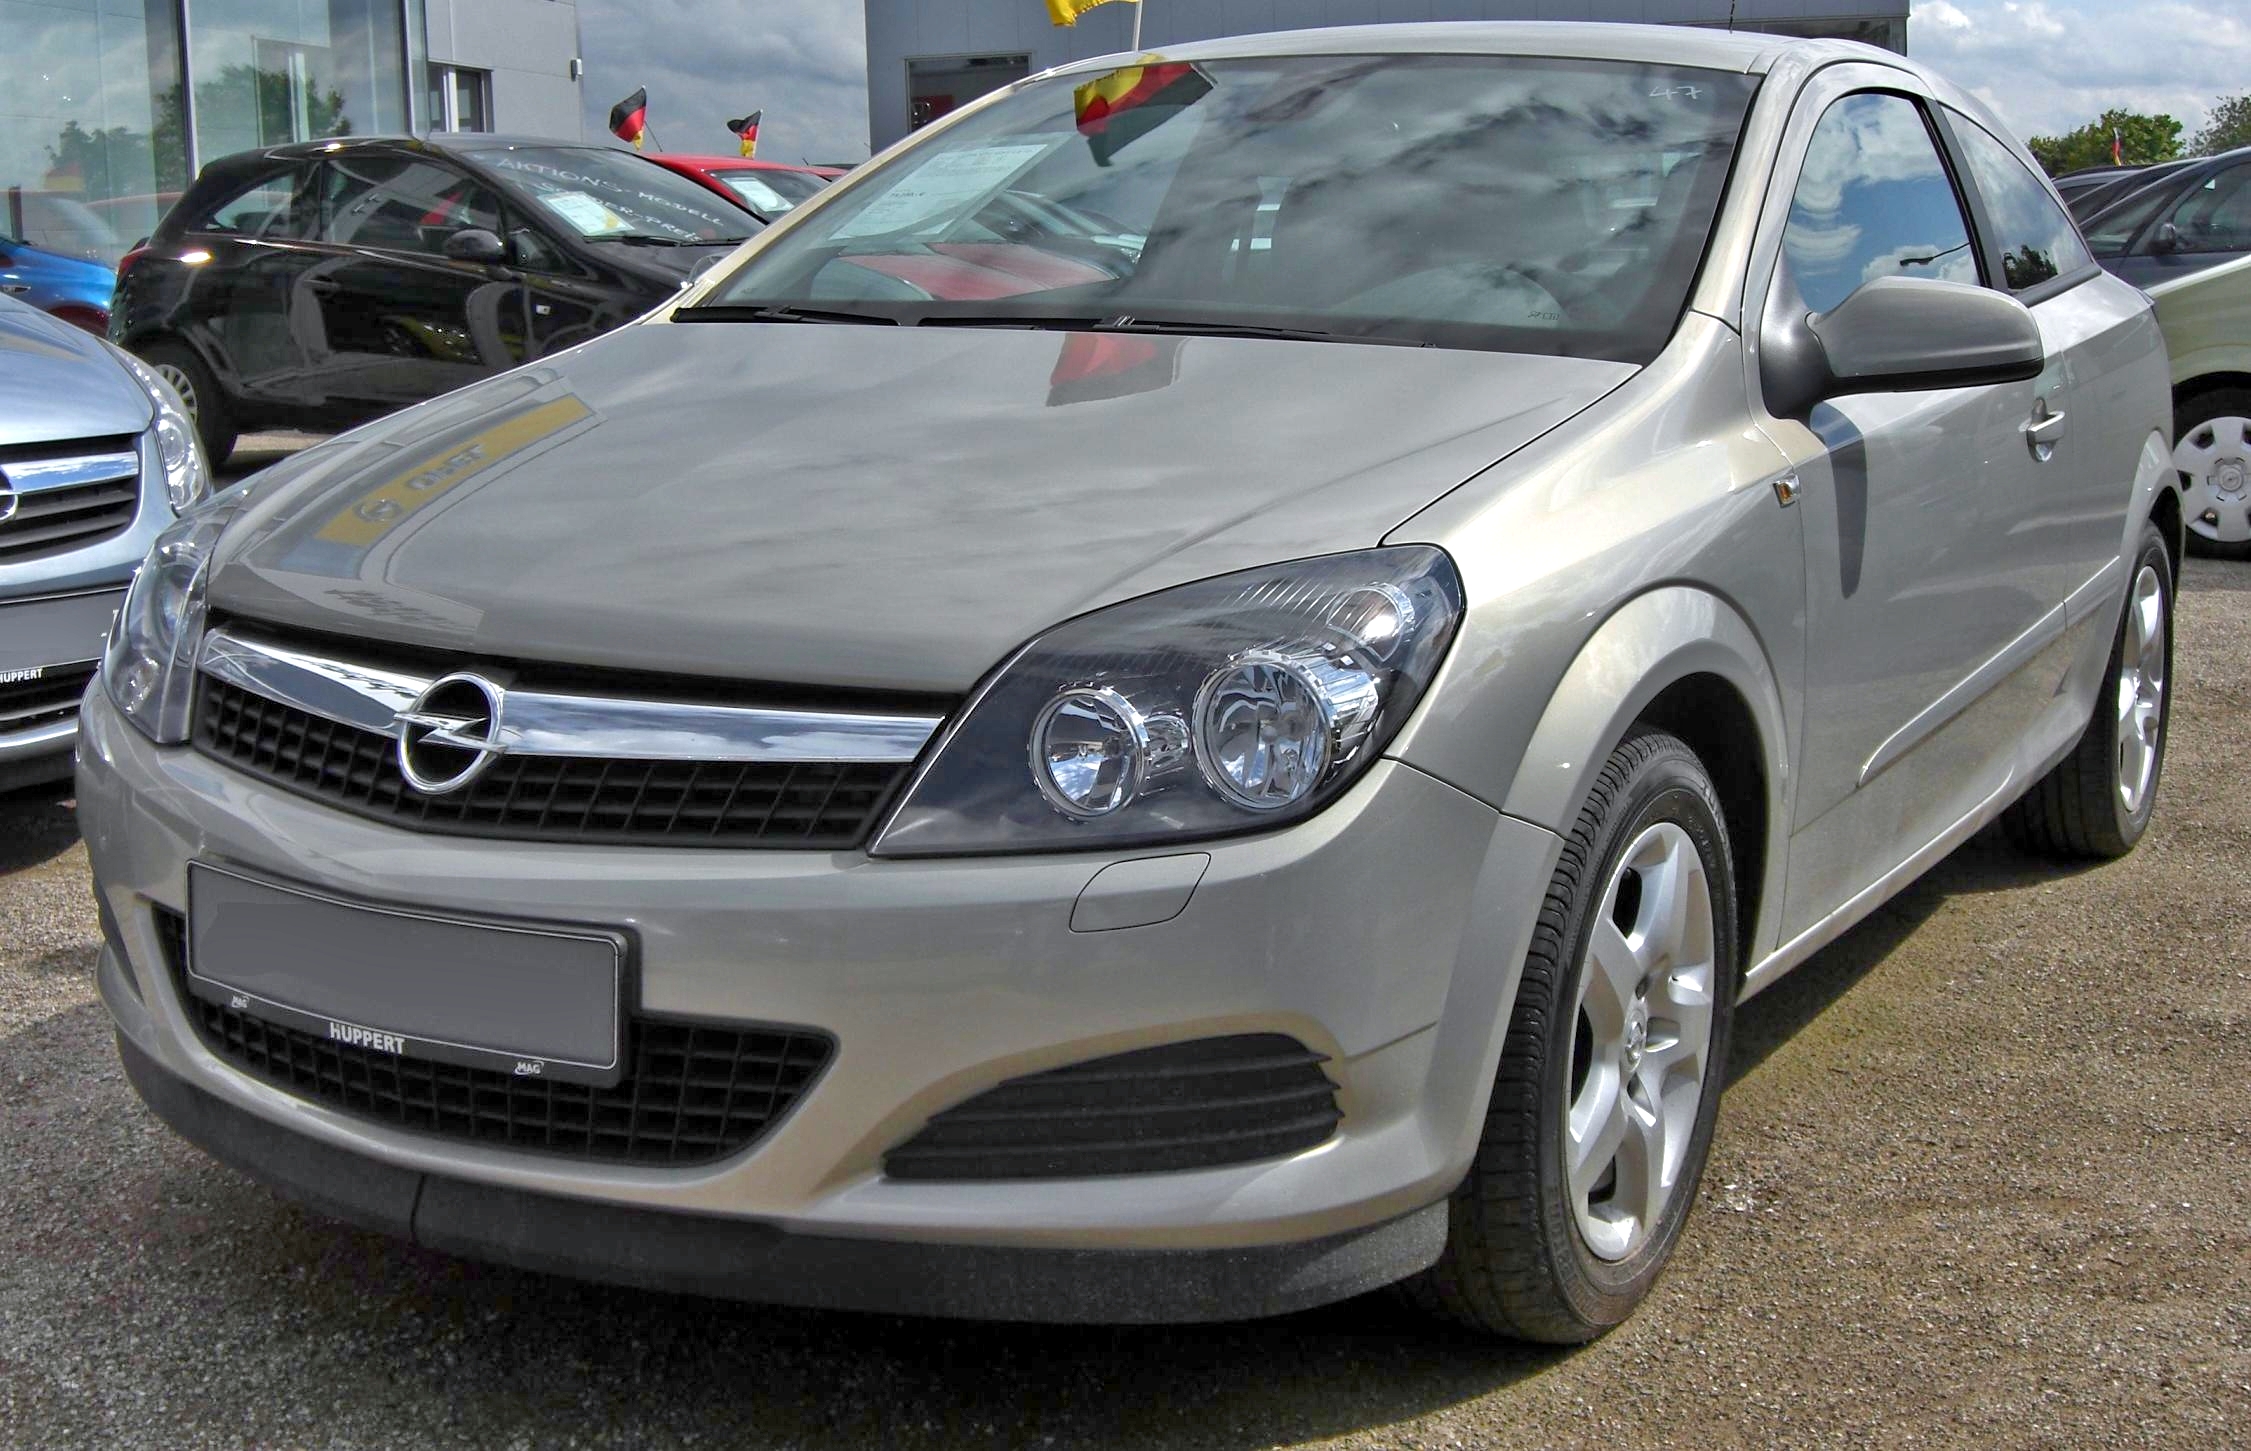 File:Opel Astra h 1.JPG - Wikimedia Commons